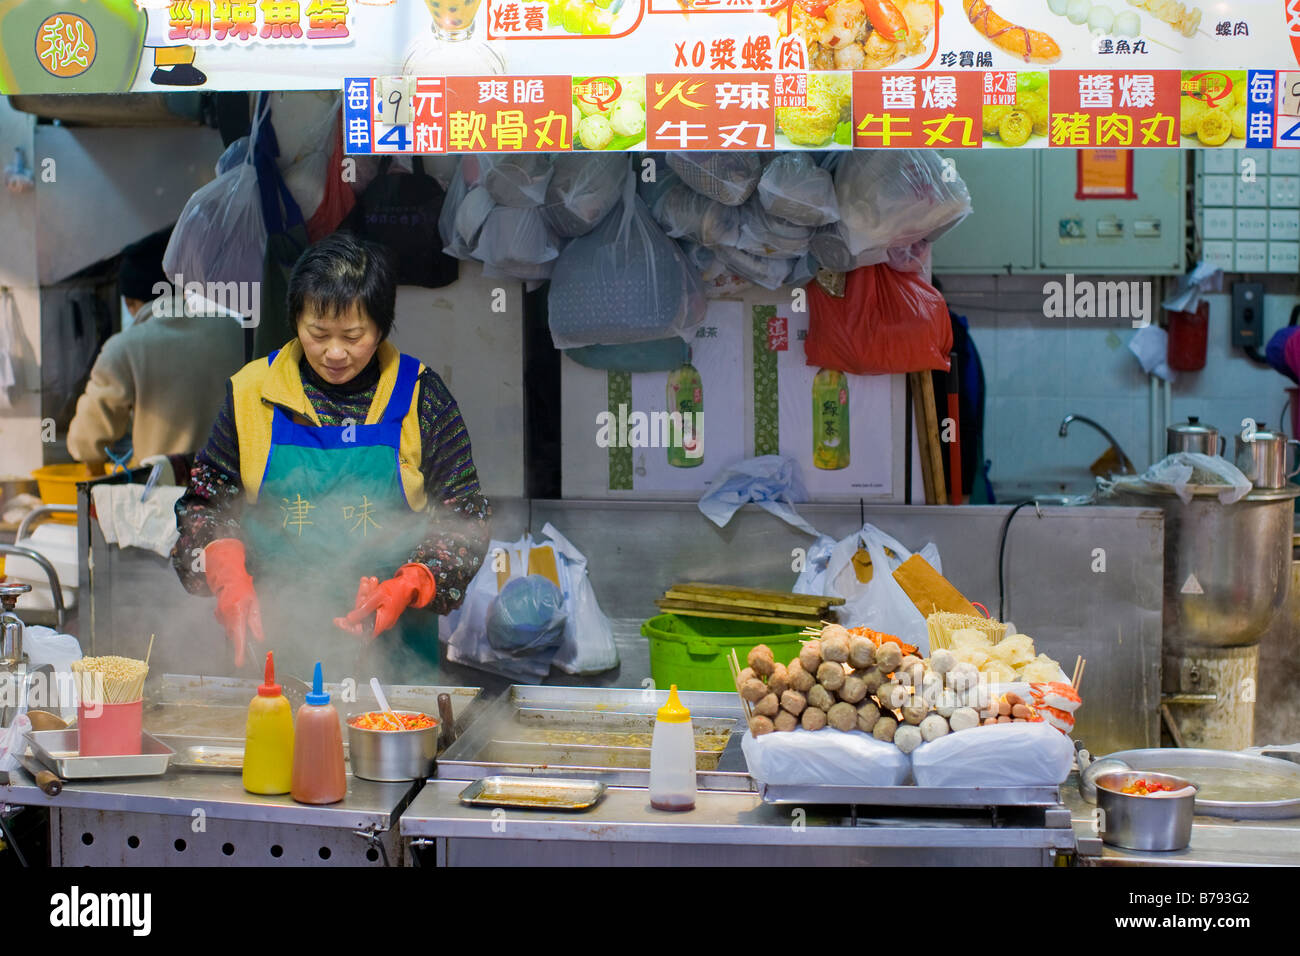 L'alimentation de rue à Hong Kong Banque D'Images